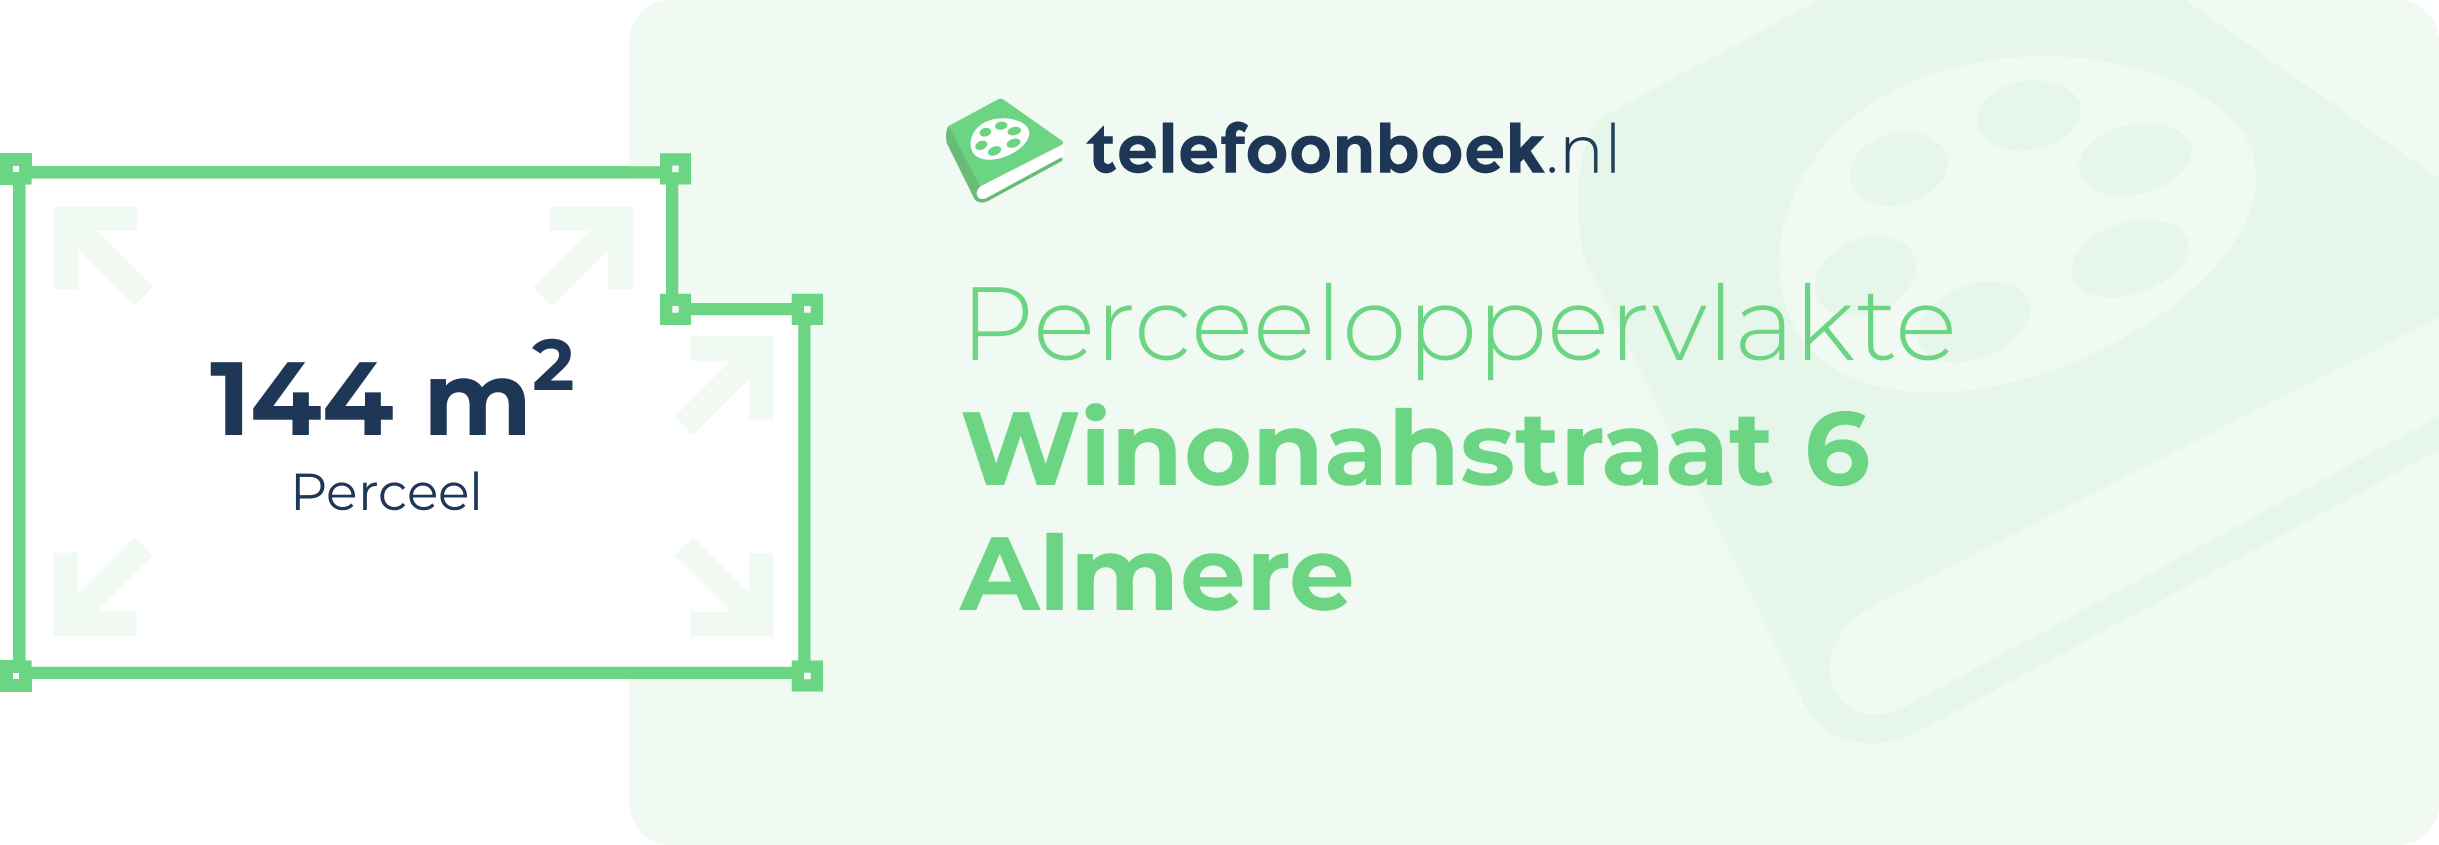 Perceeloppervlakte Winonahstraat 6 Almere